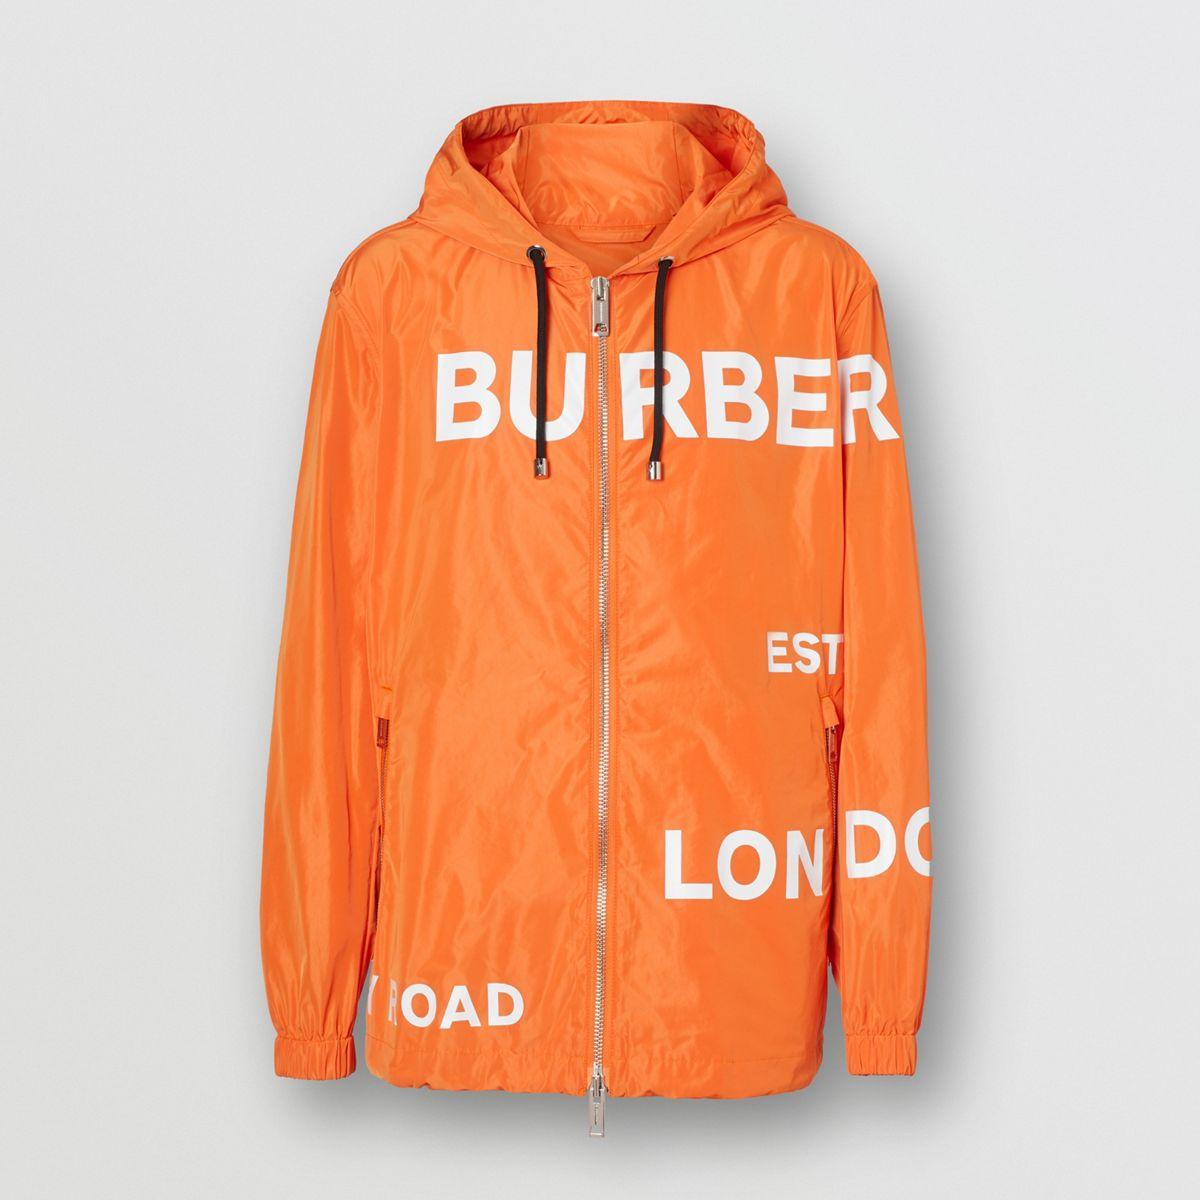 Burberry Synthetic Horseferry Print Nylon Hooded Jacket in Bright Orange  (Orange) for Men - Lyst